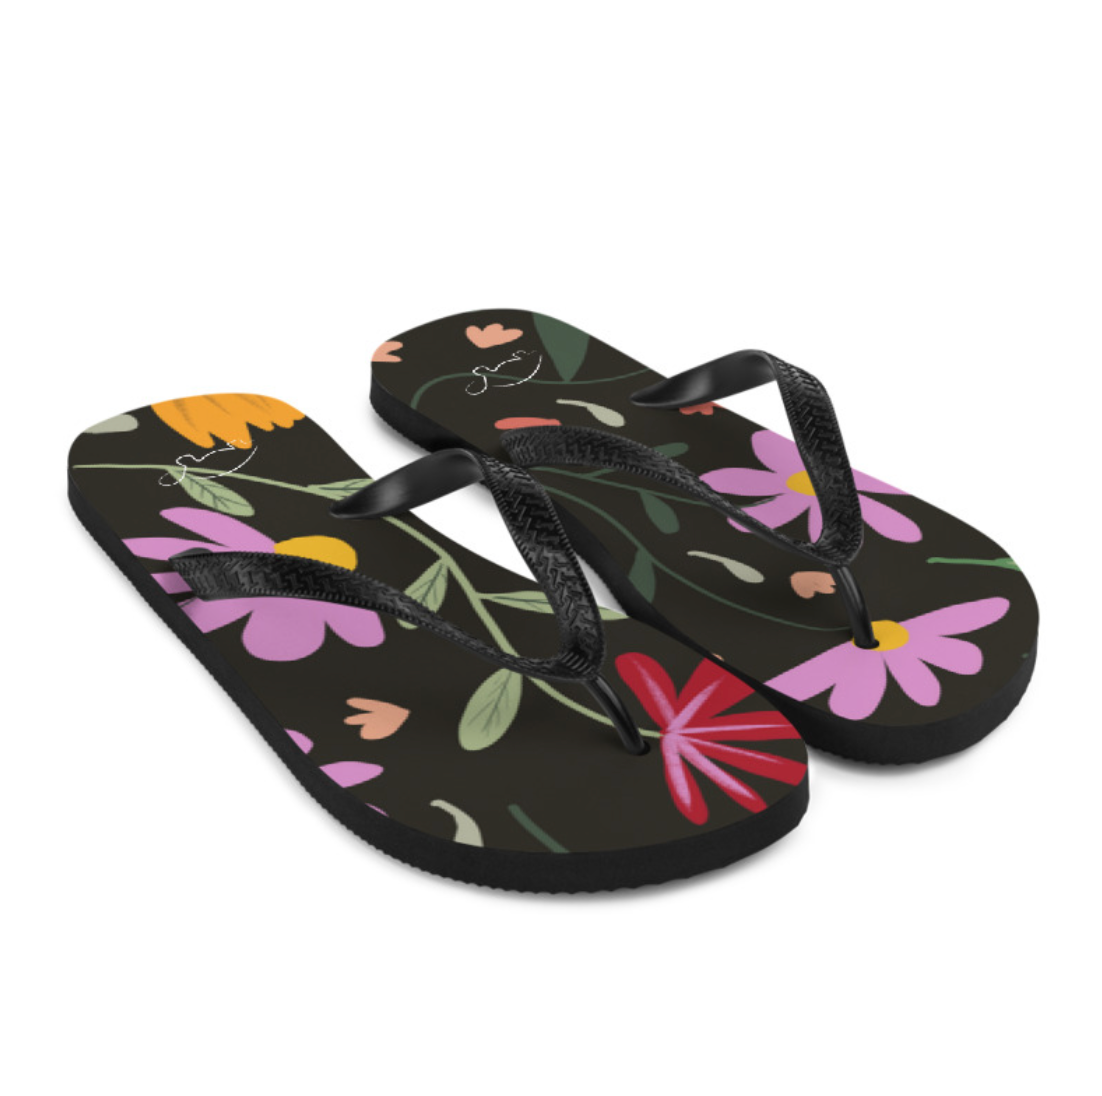 Botanical Black Women's Flip Flops. Pattern hand-painted by the Designer Maria Alejandra Echenique